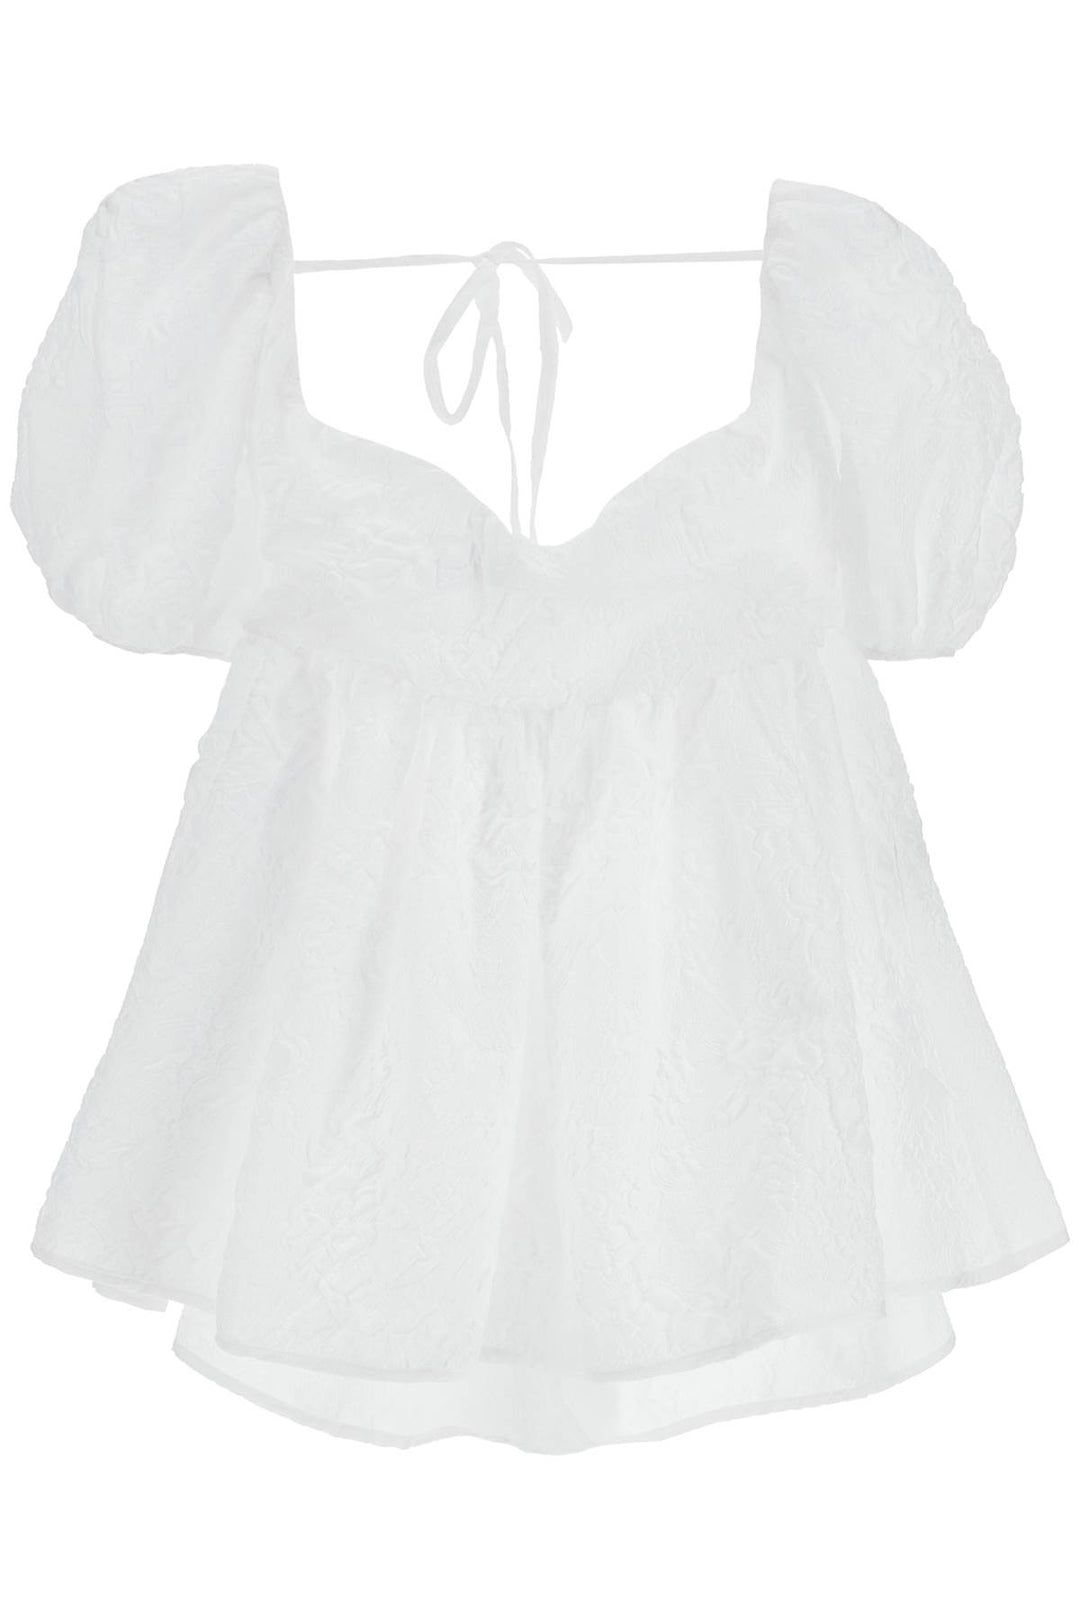 Cecilie Bahnsen 'Sari' Top   Bianco